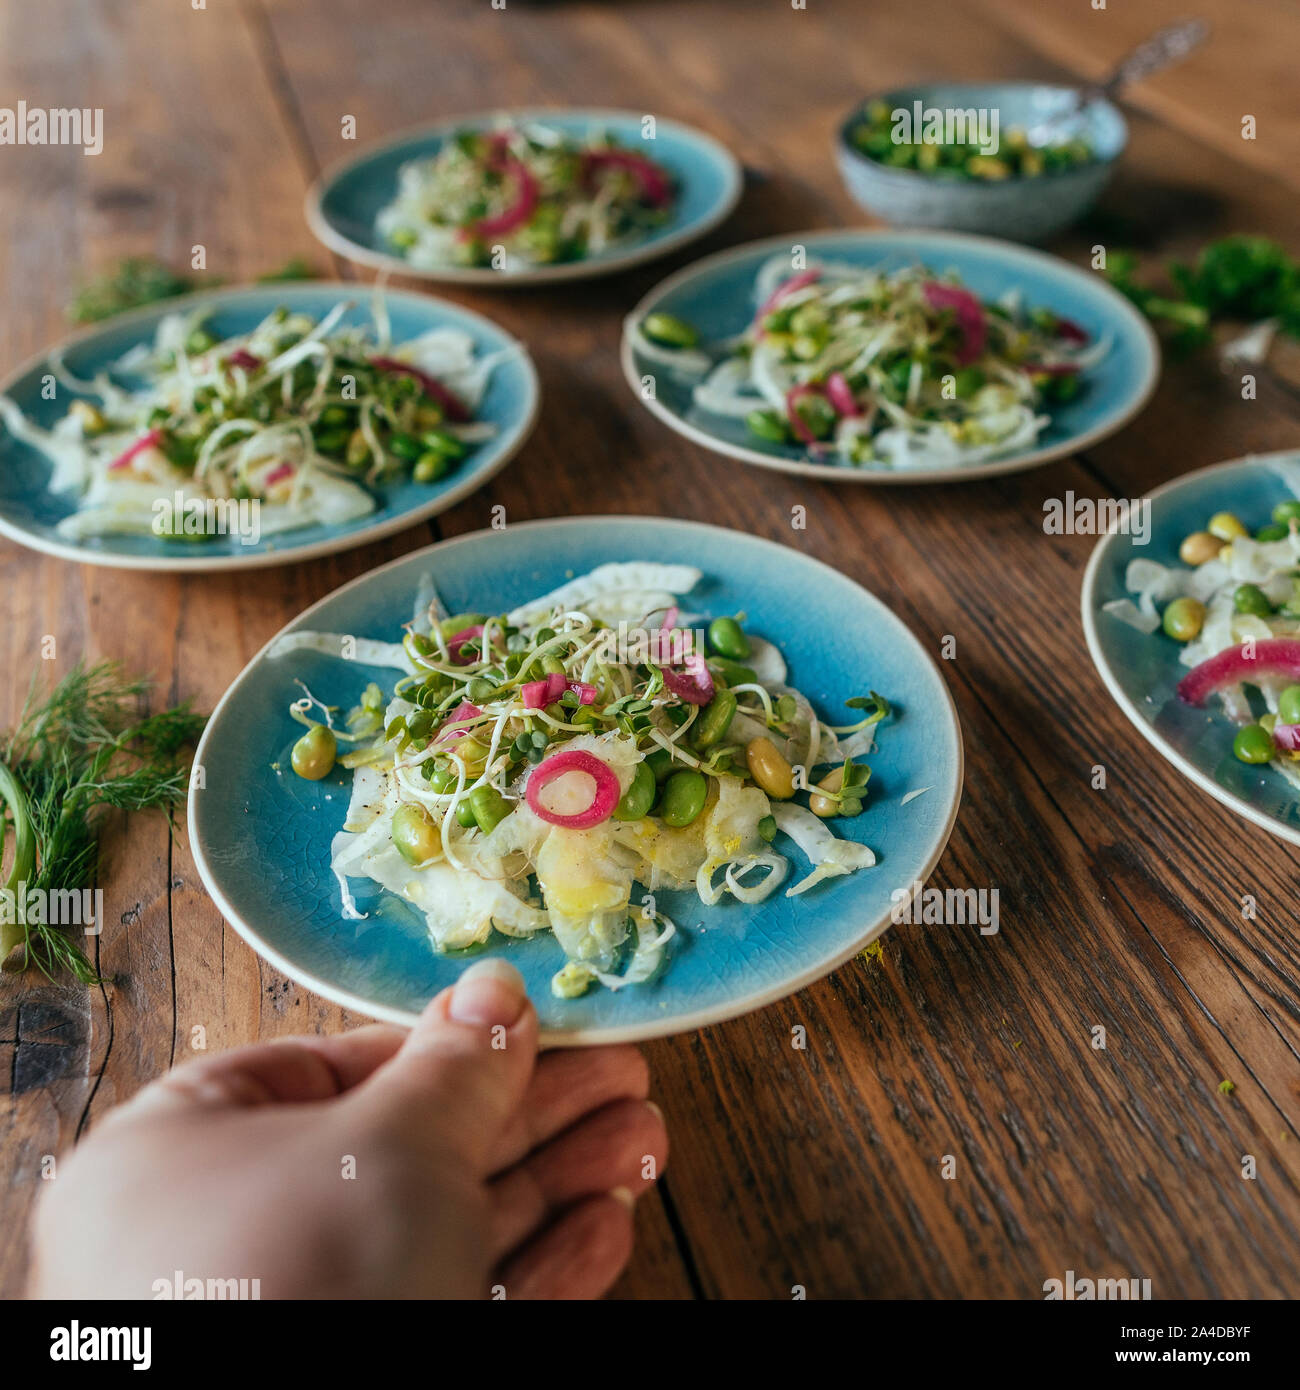 Woman serving plates of radish salad Stock Photo